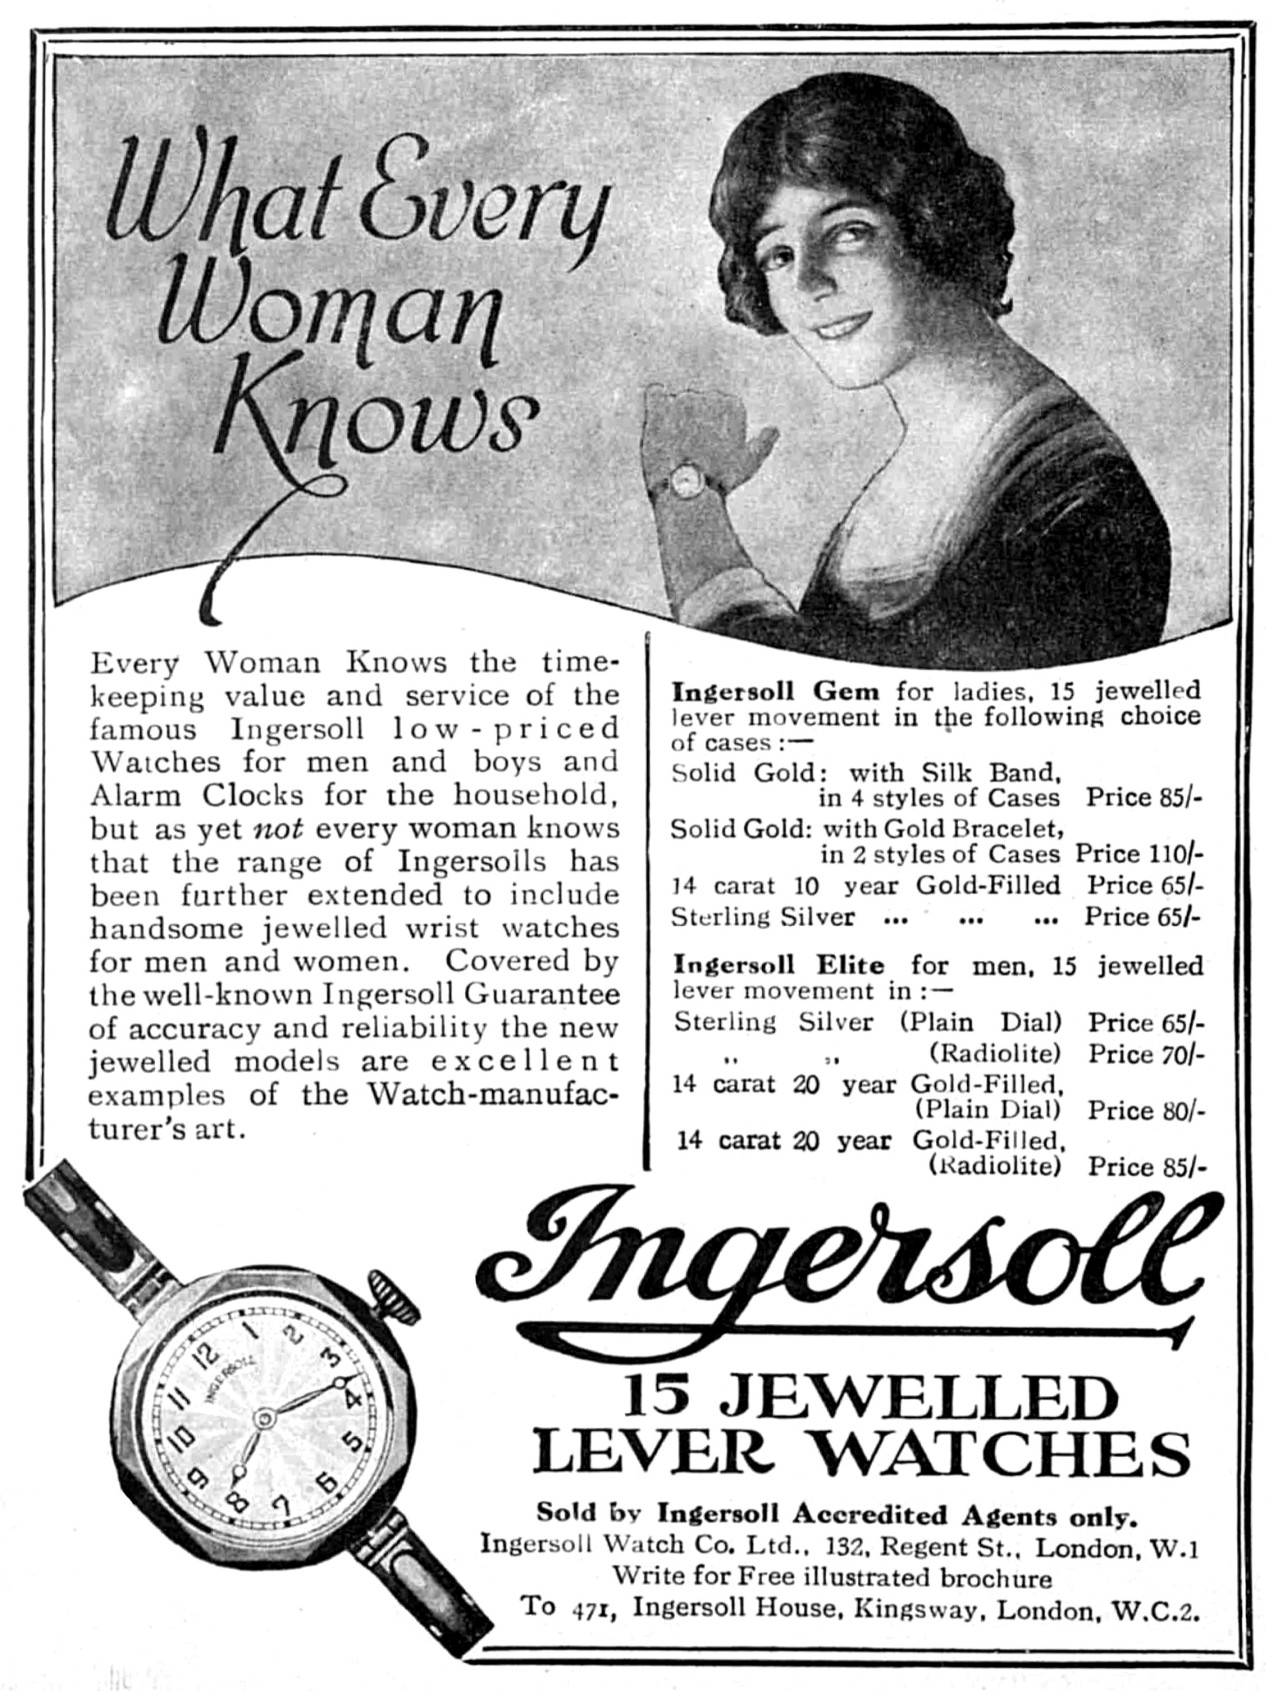 Ingersoll Gem and Elite, 1925